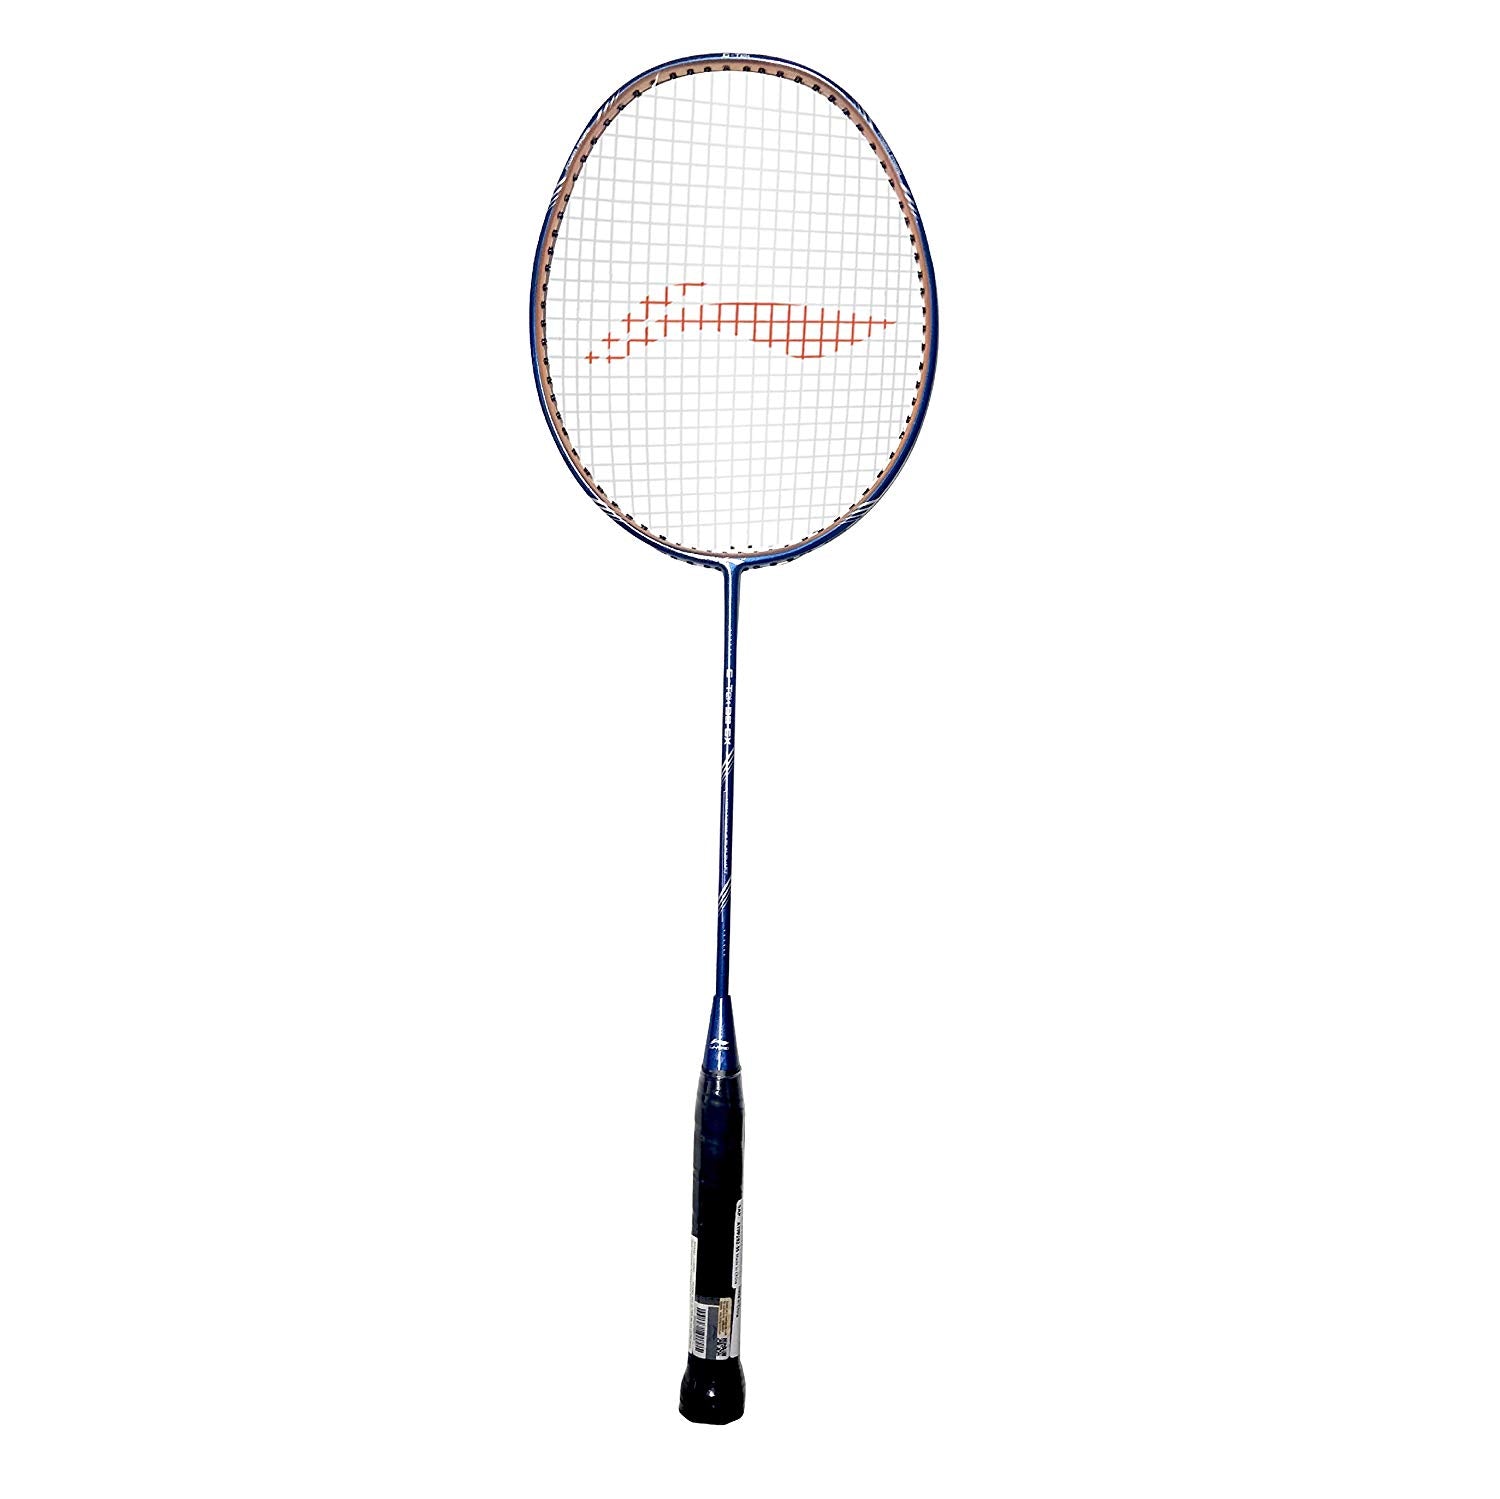 Li-Ning G-TEK 98 GX Graphite Strung Badminton Racquets (Navy/Gold) - Best Price online Prokicksports.com